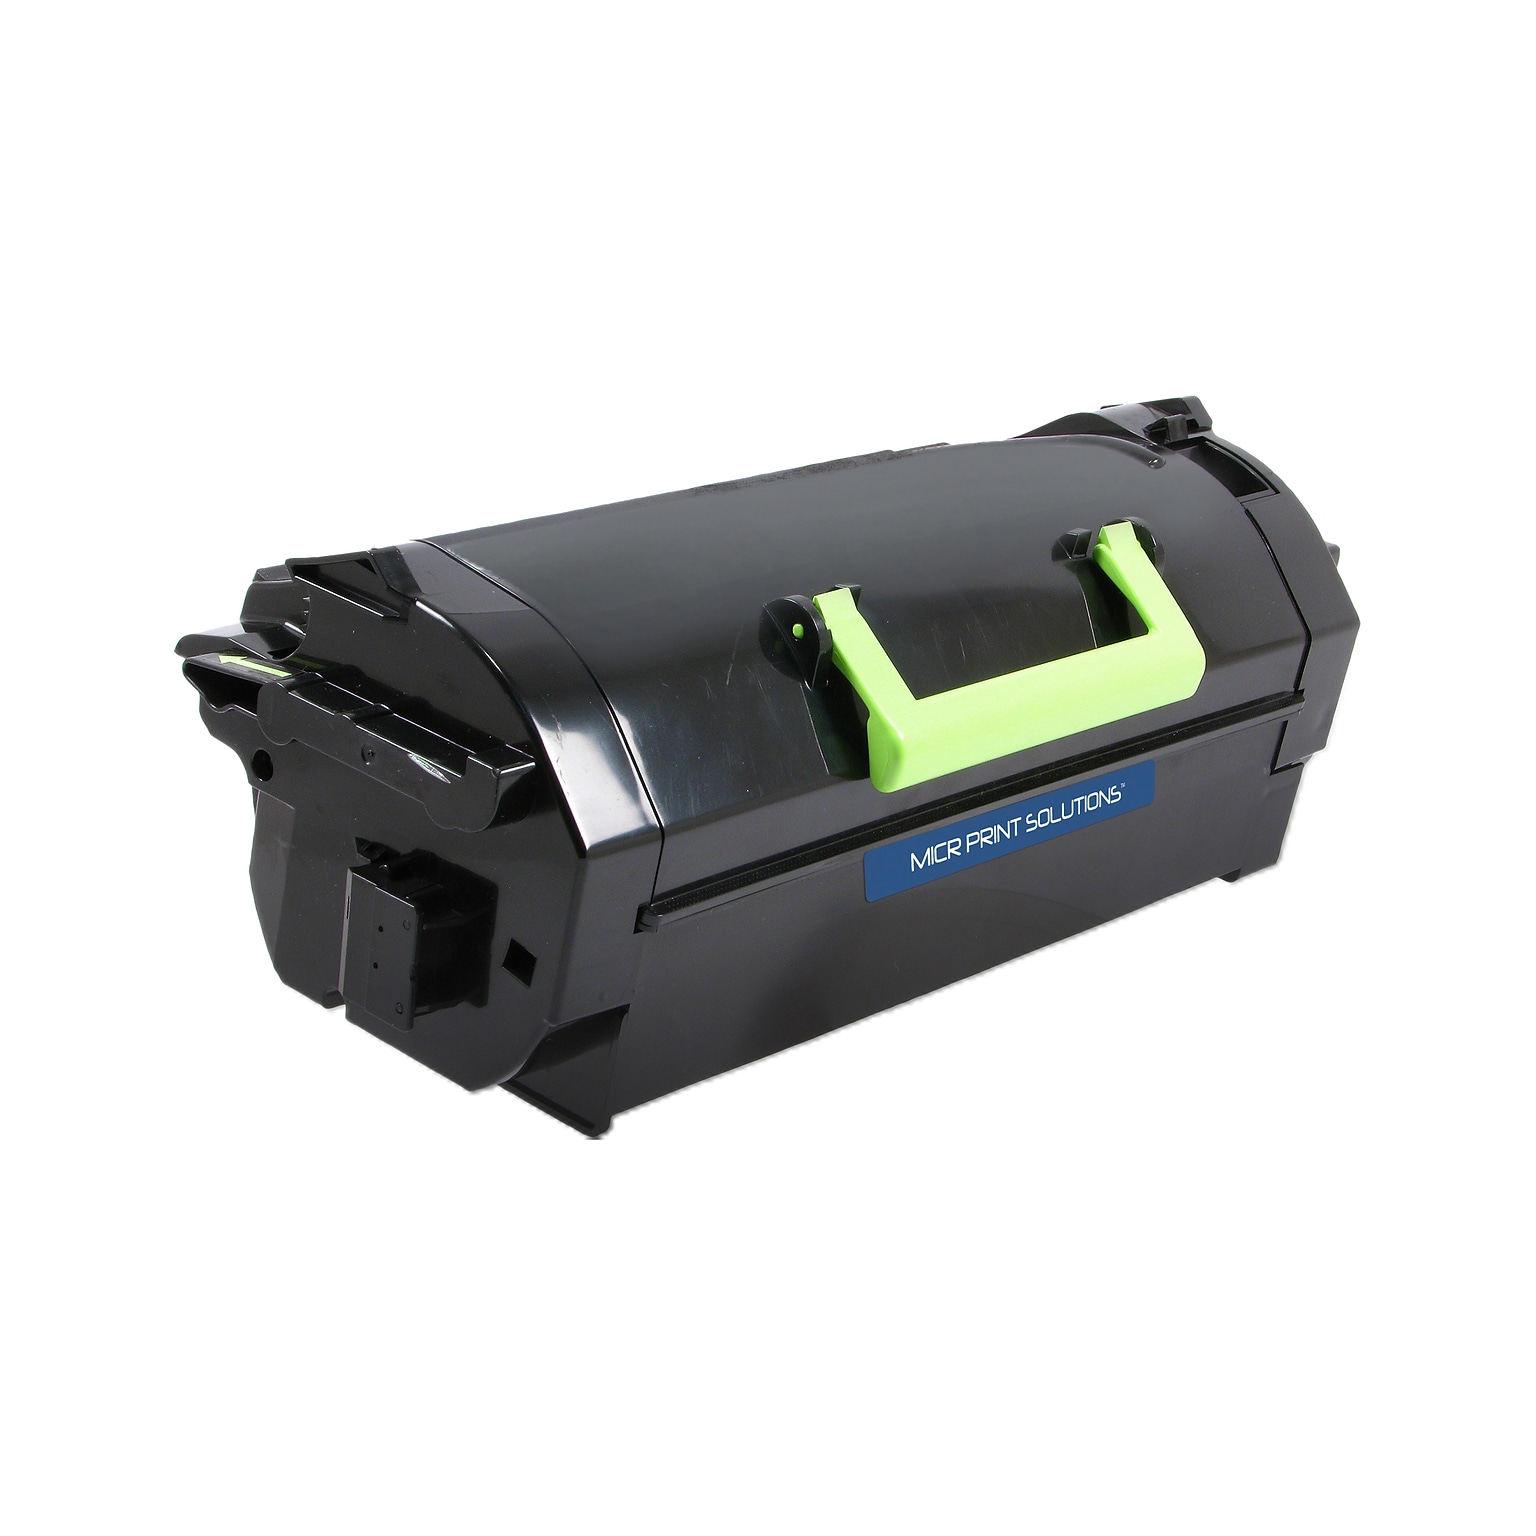 MICR Print Solutions Toner Cartridge for Lexmark MS817 (53B1000)